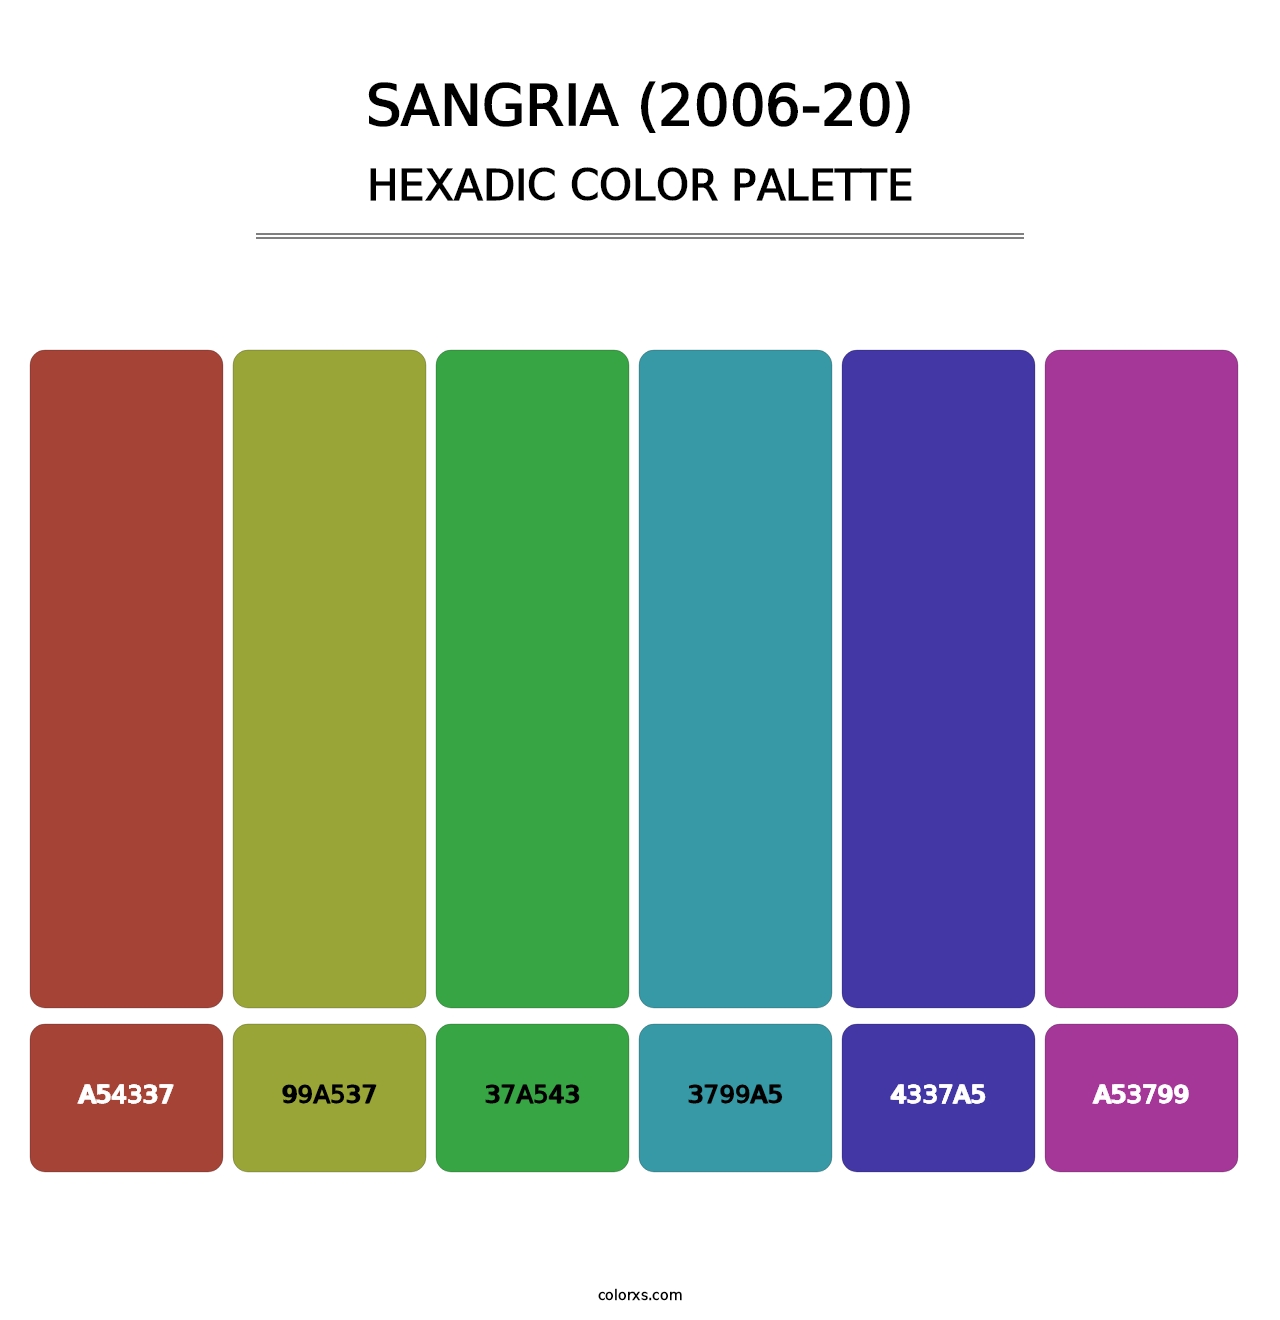 Sangria (2006-20) - Hexadic Color Palette